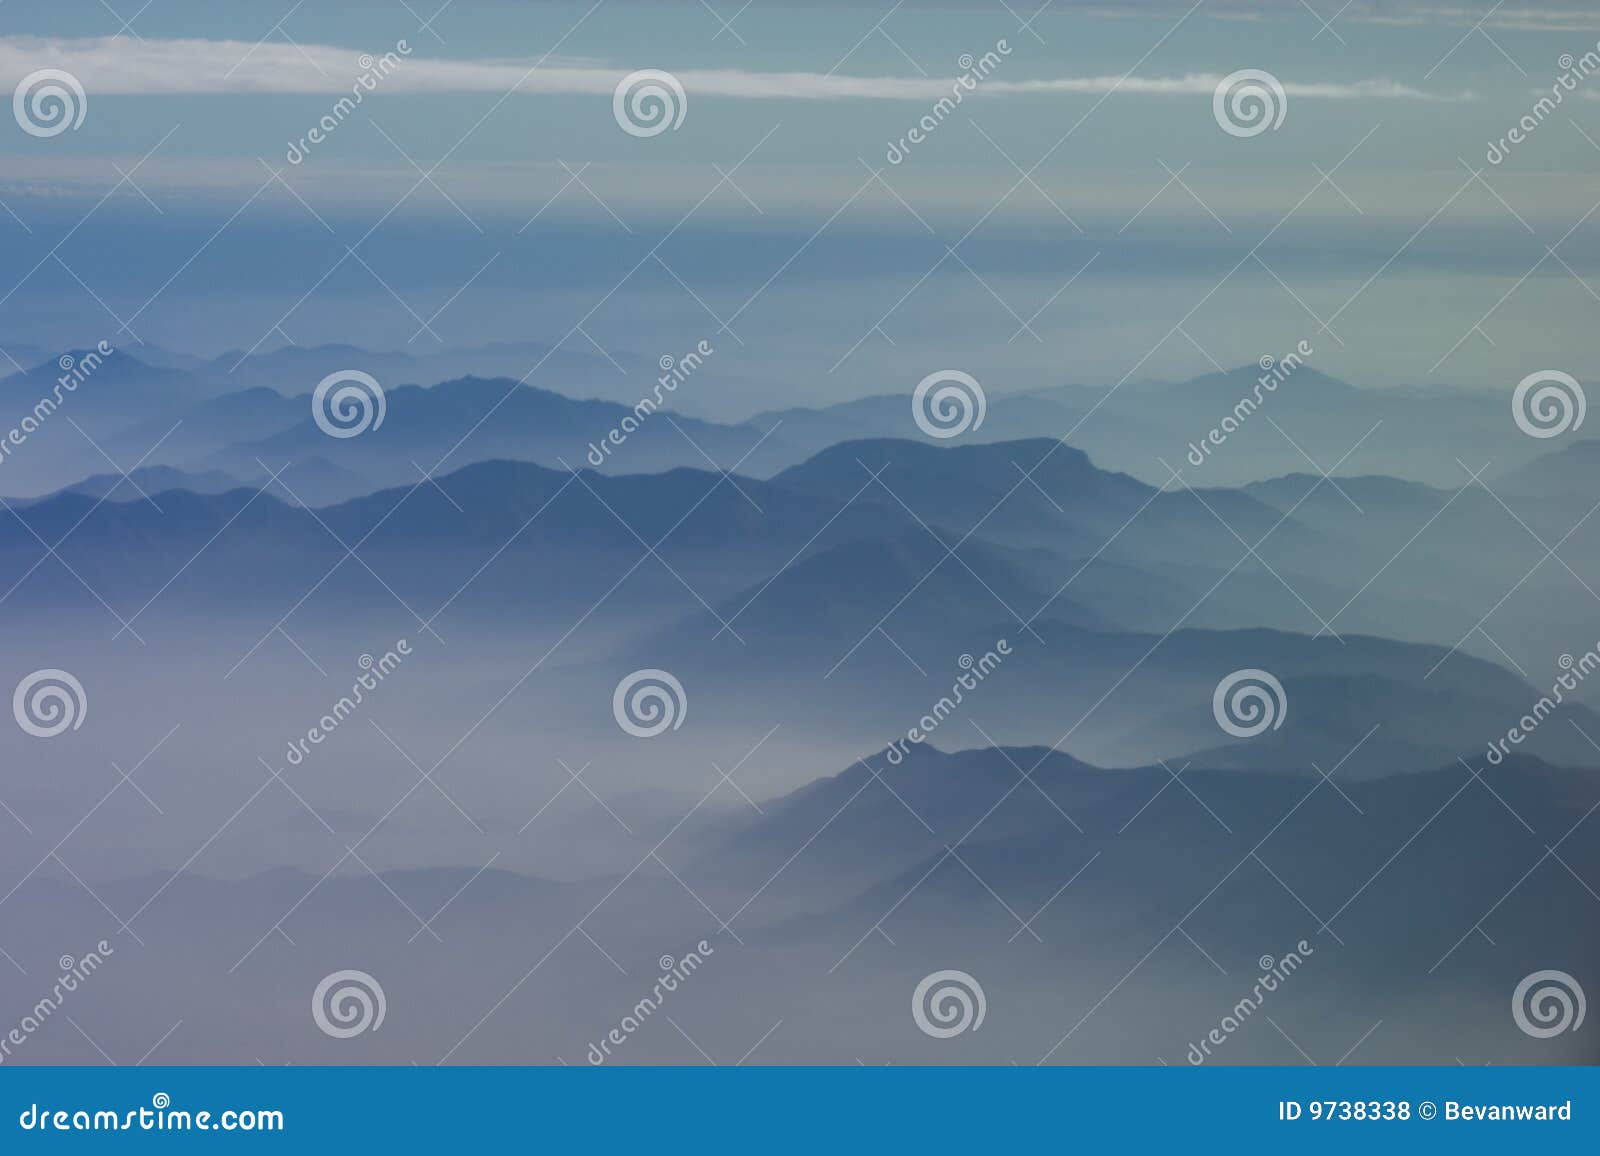 mountainous peaks exposed through cloud